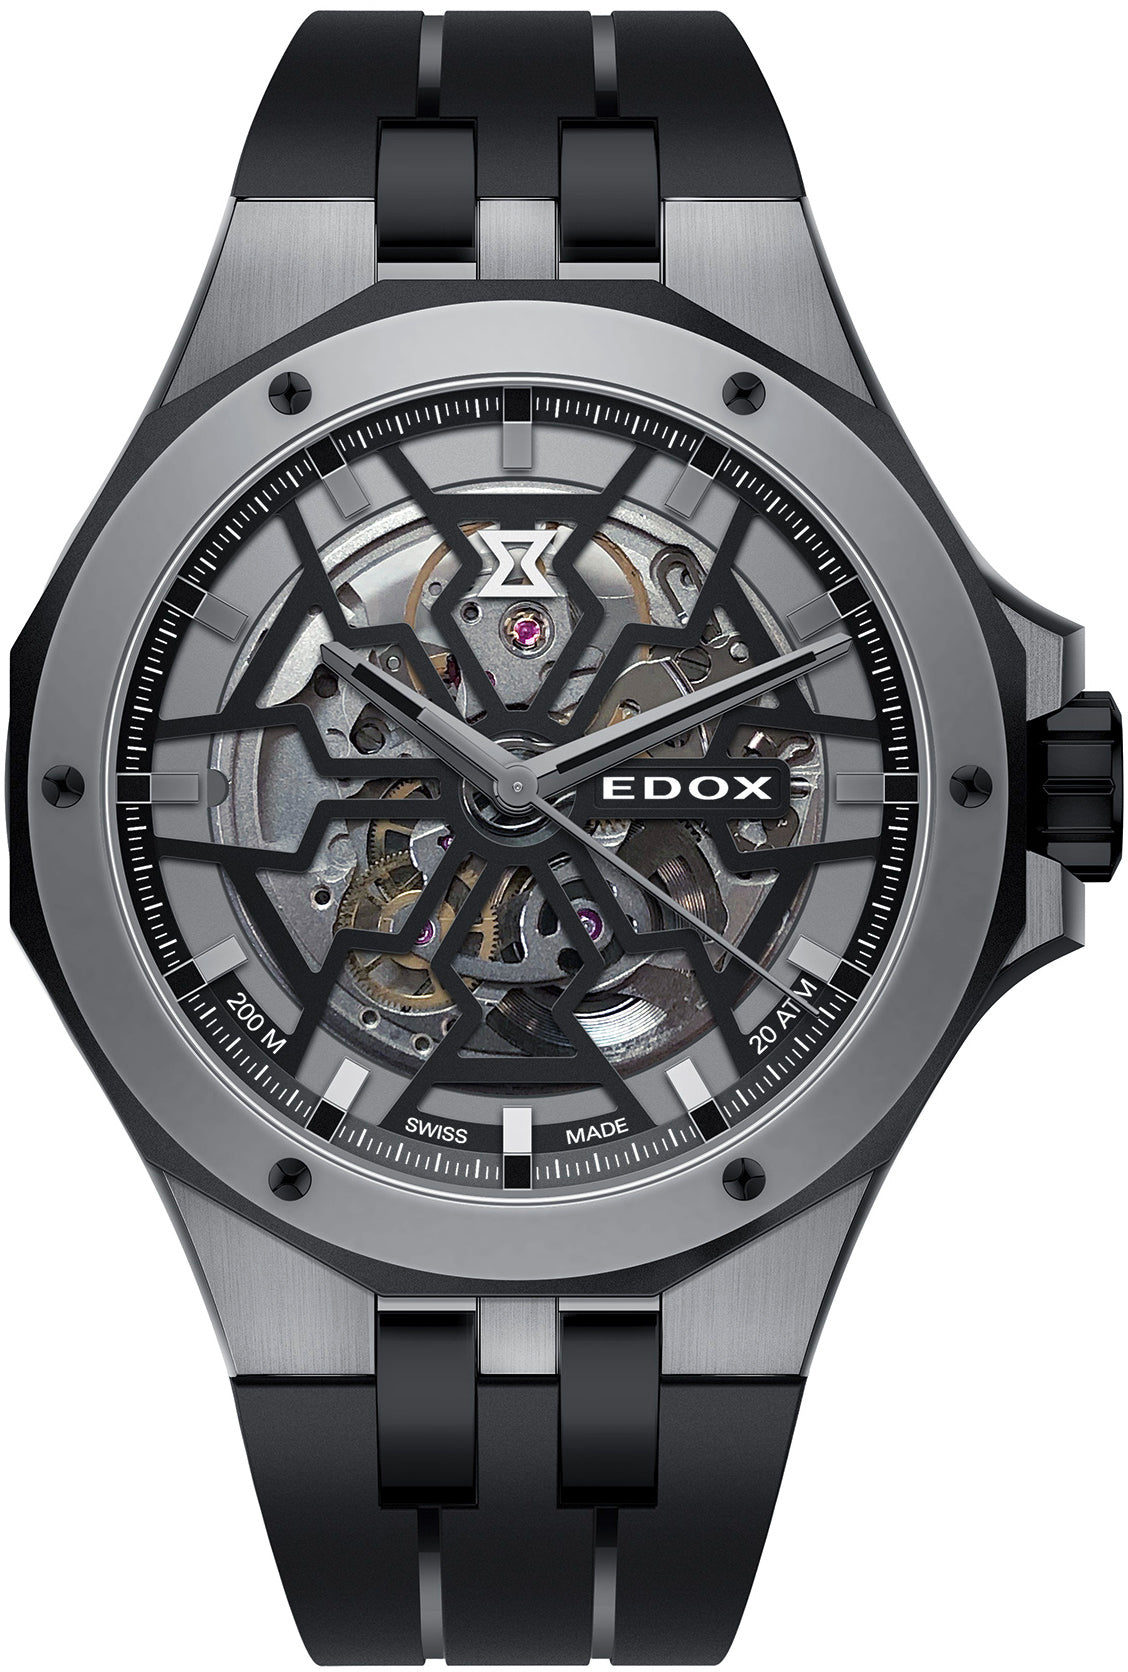 Photos - Wrist Watch EDOX Watch Delfin Mecano 3 Hands Skeleton - Silver EDX-048 